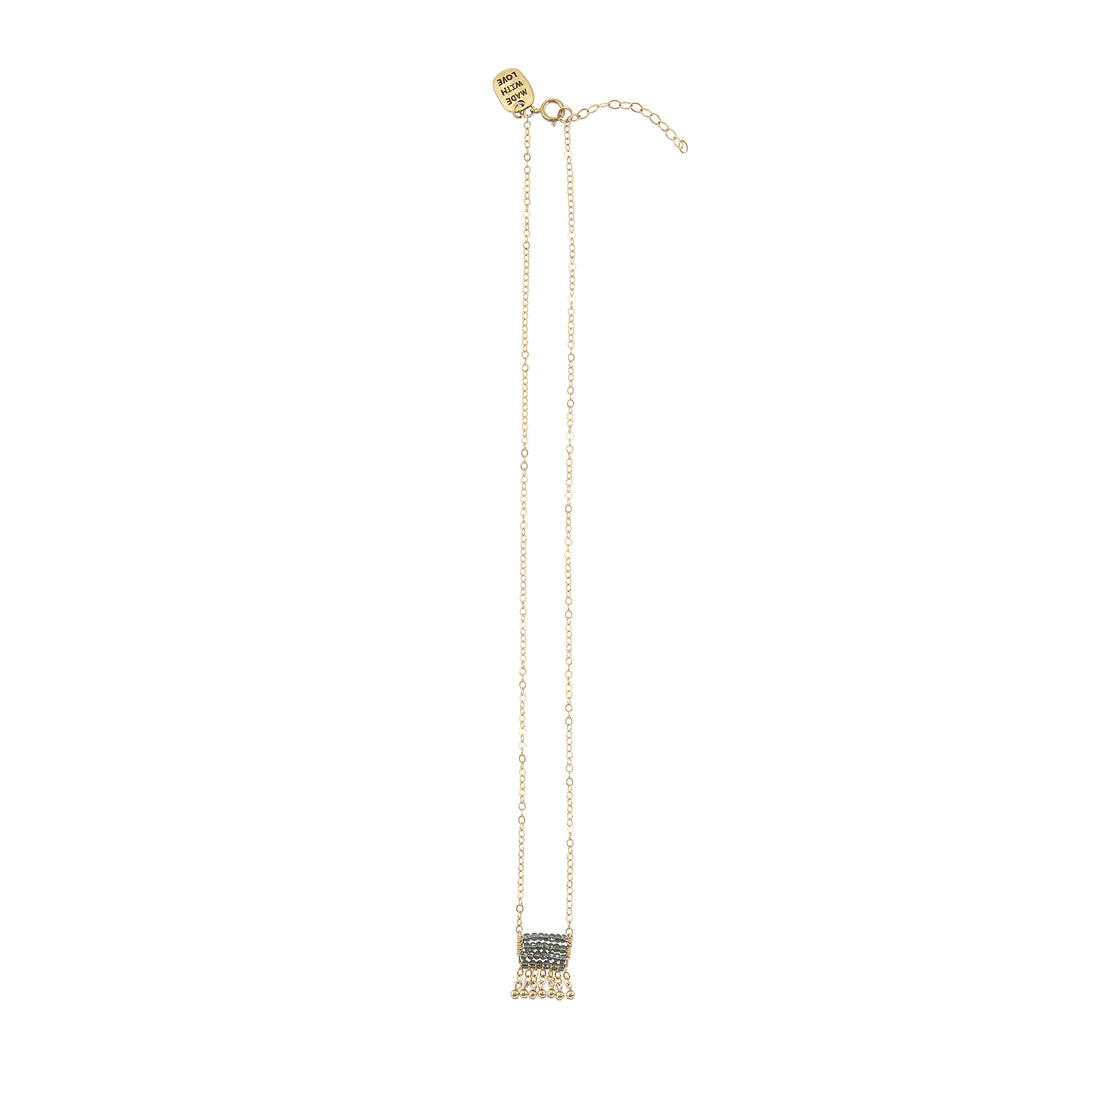 Mini Olakira Necklace with Chain Tassels - SHINY GRAPHITE, GOLD